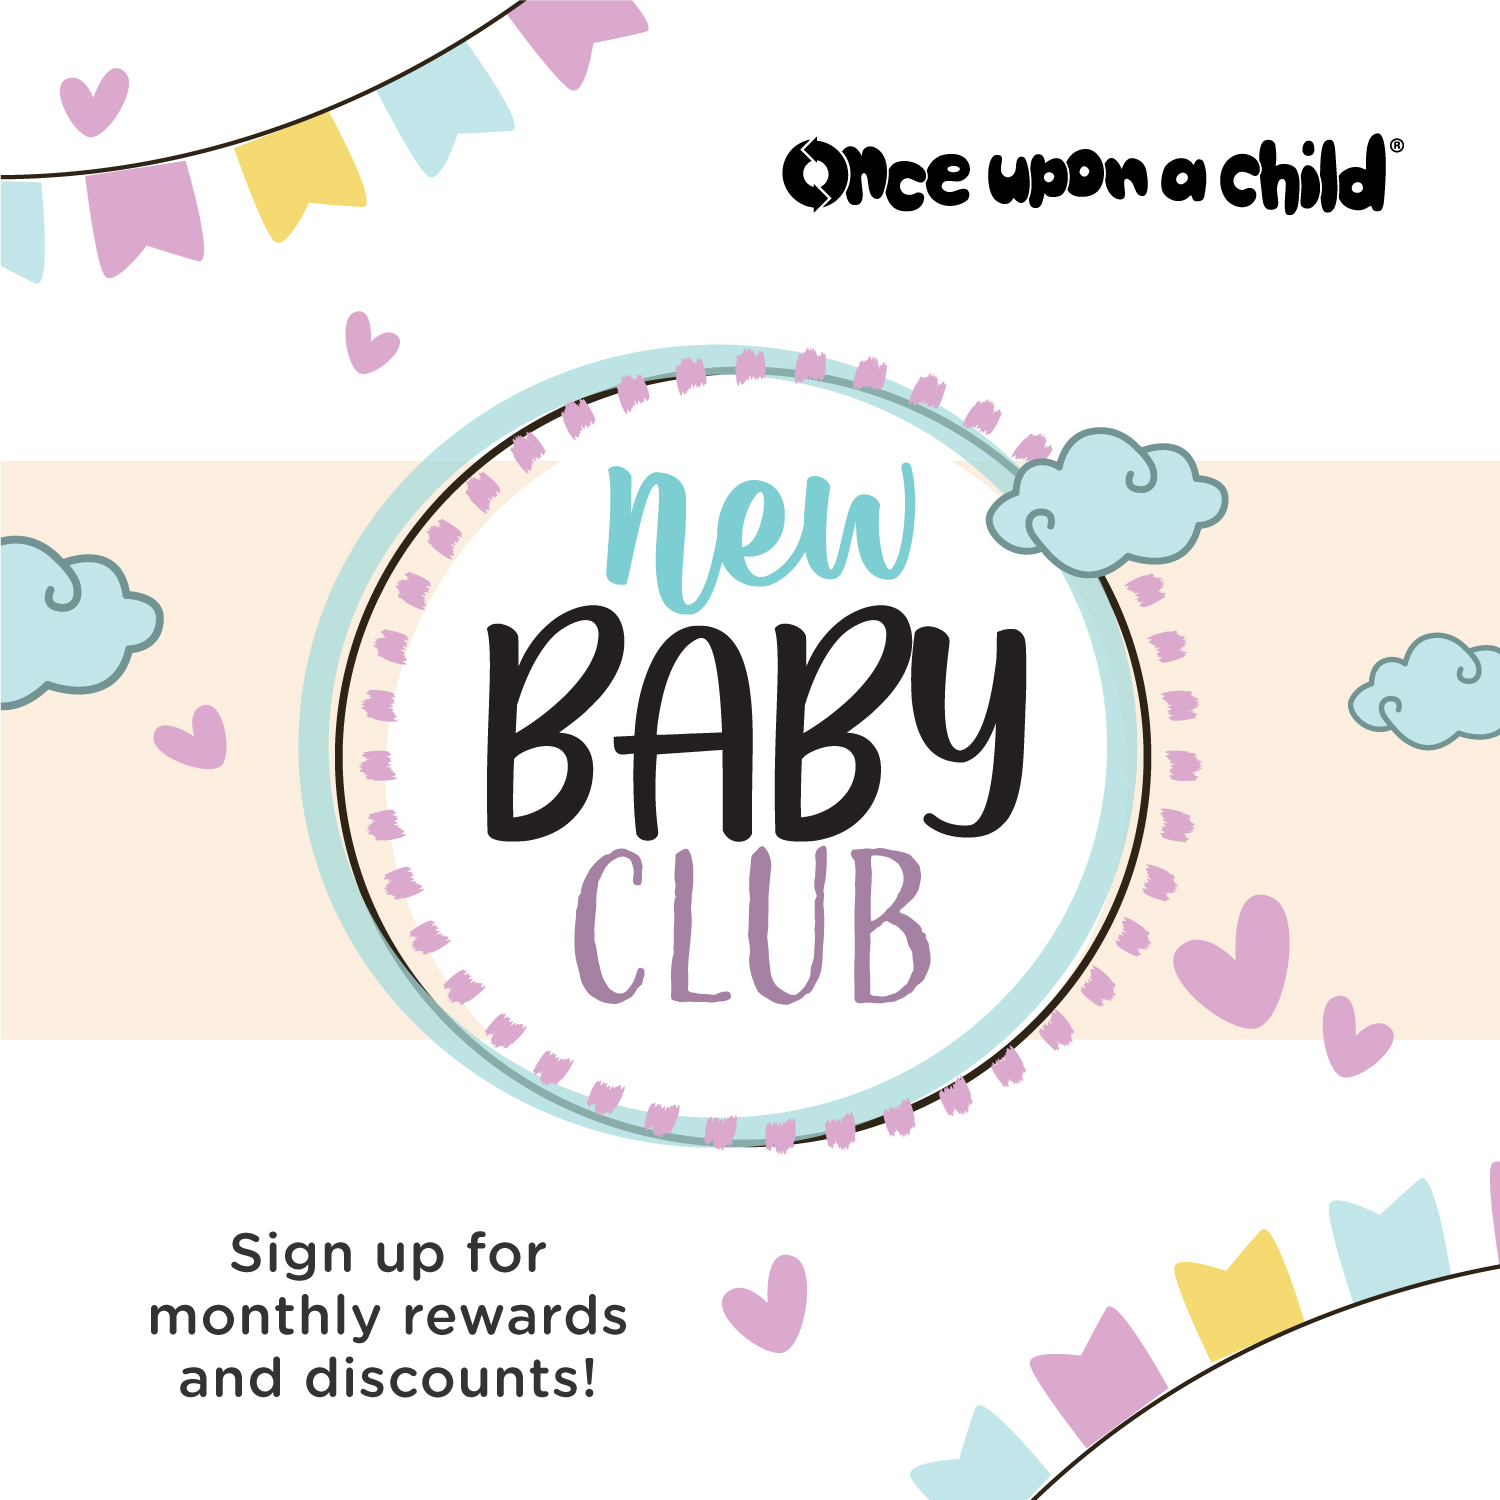 New baby club